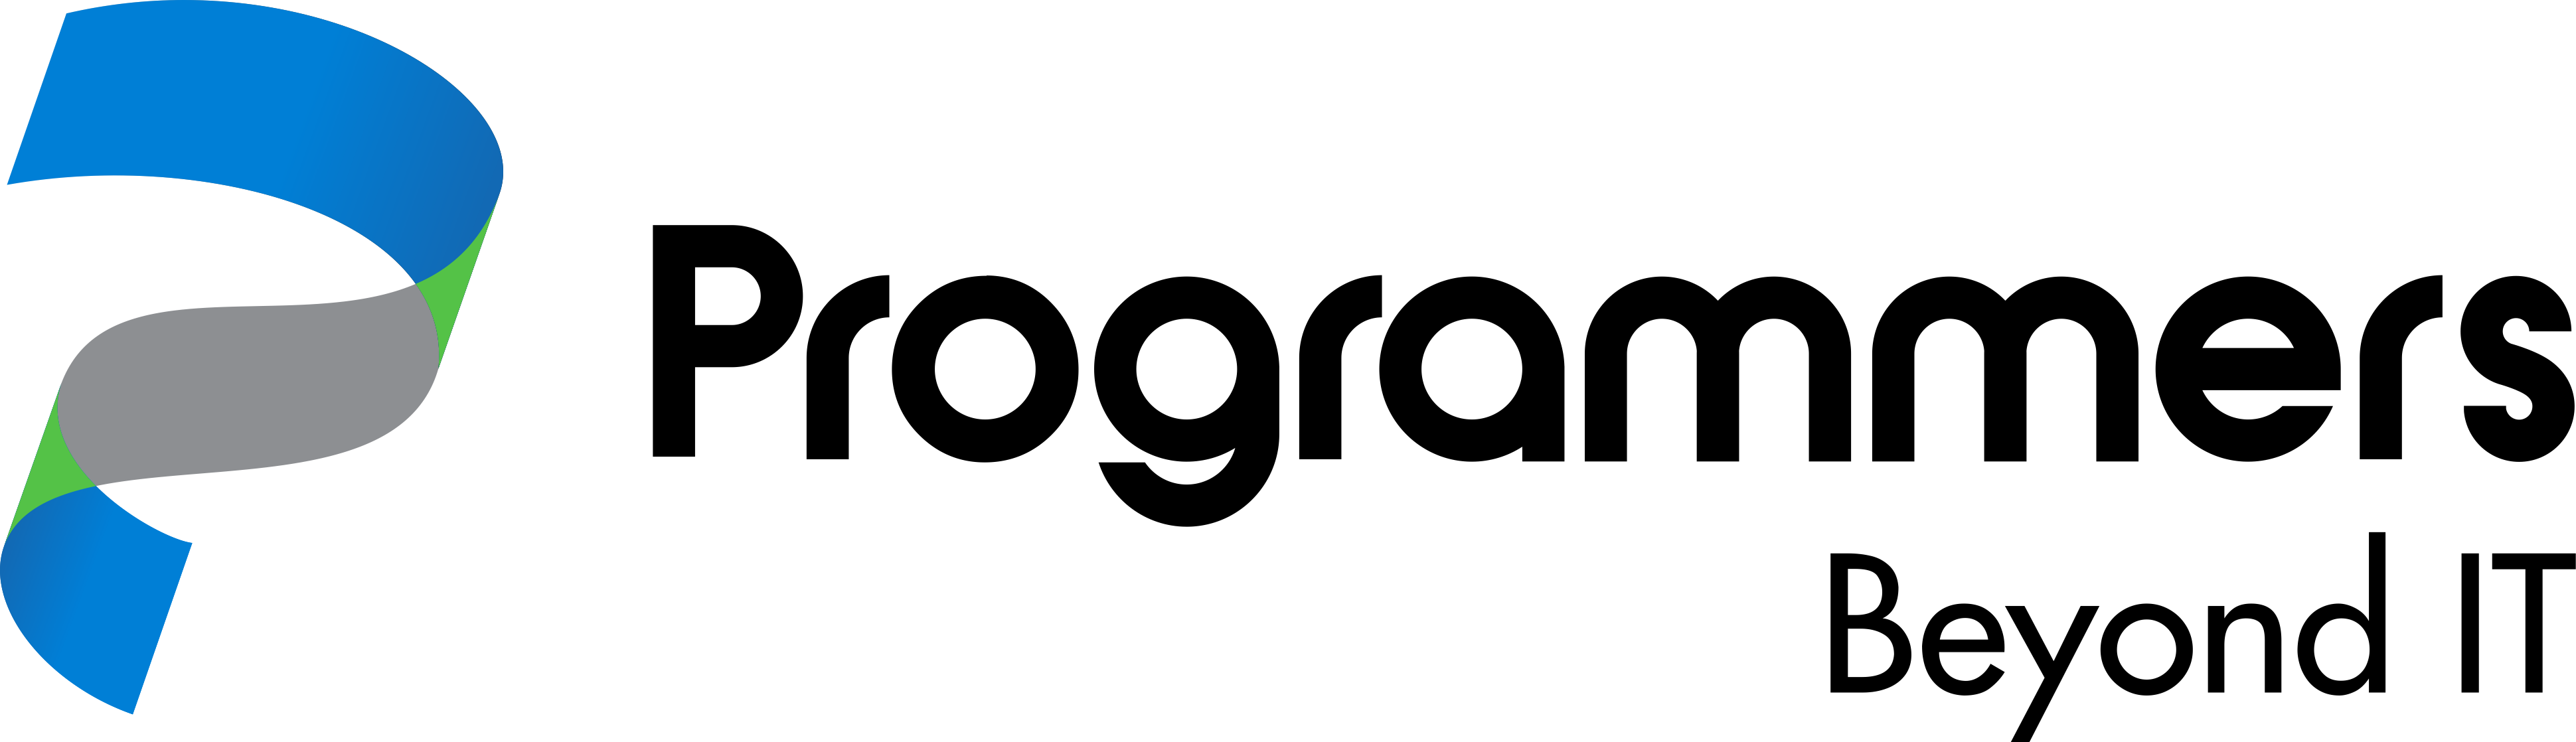 programmers-logo